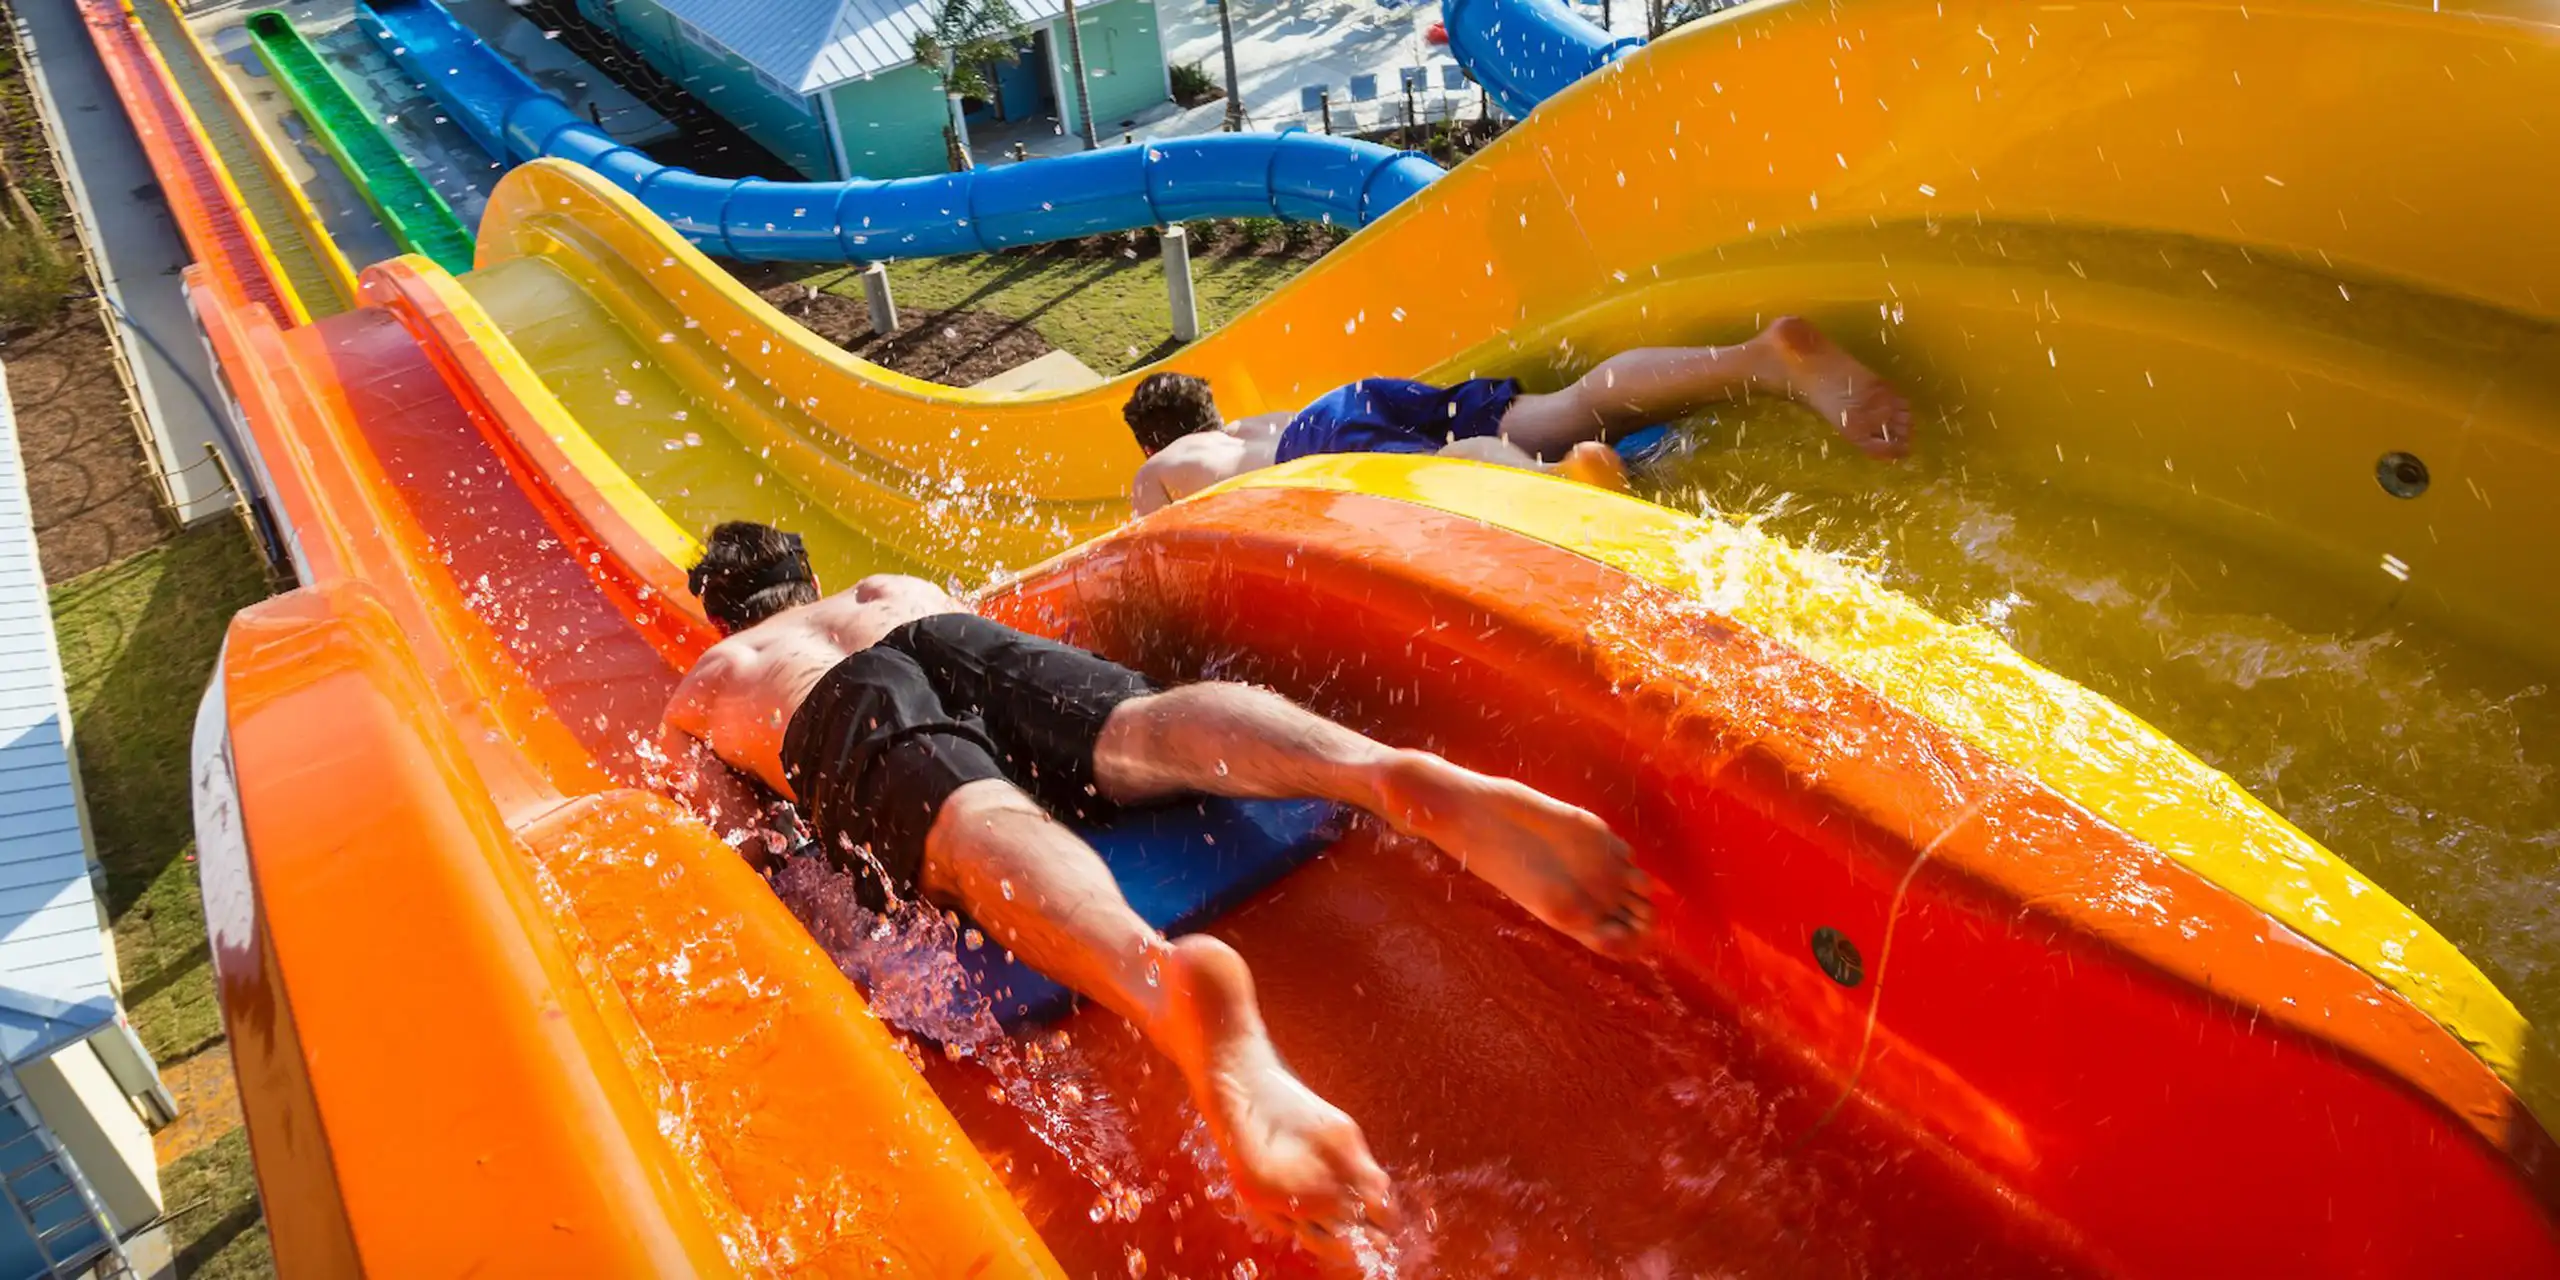 THE 5 BEST Water & Amusement Parks in Myrtle Beach (2023)